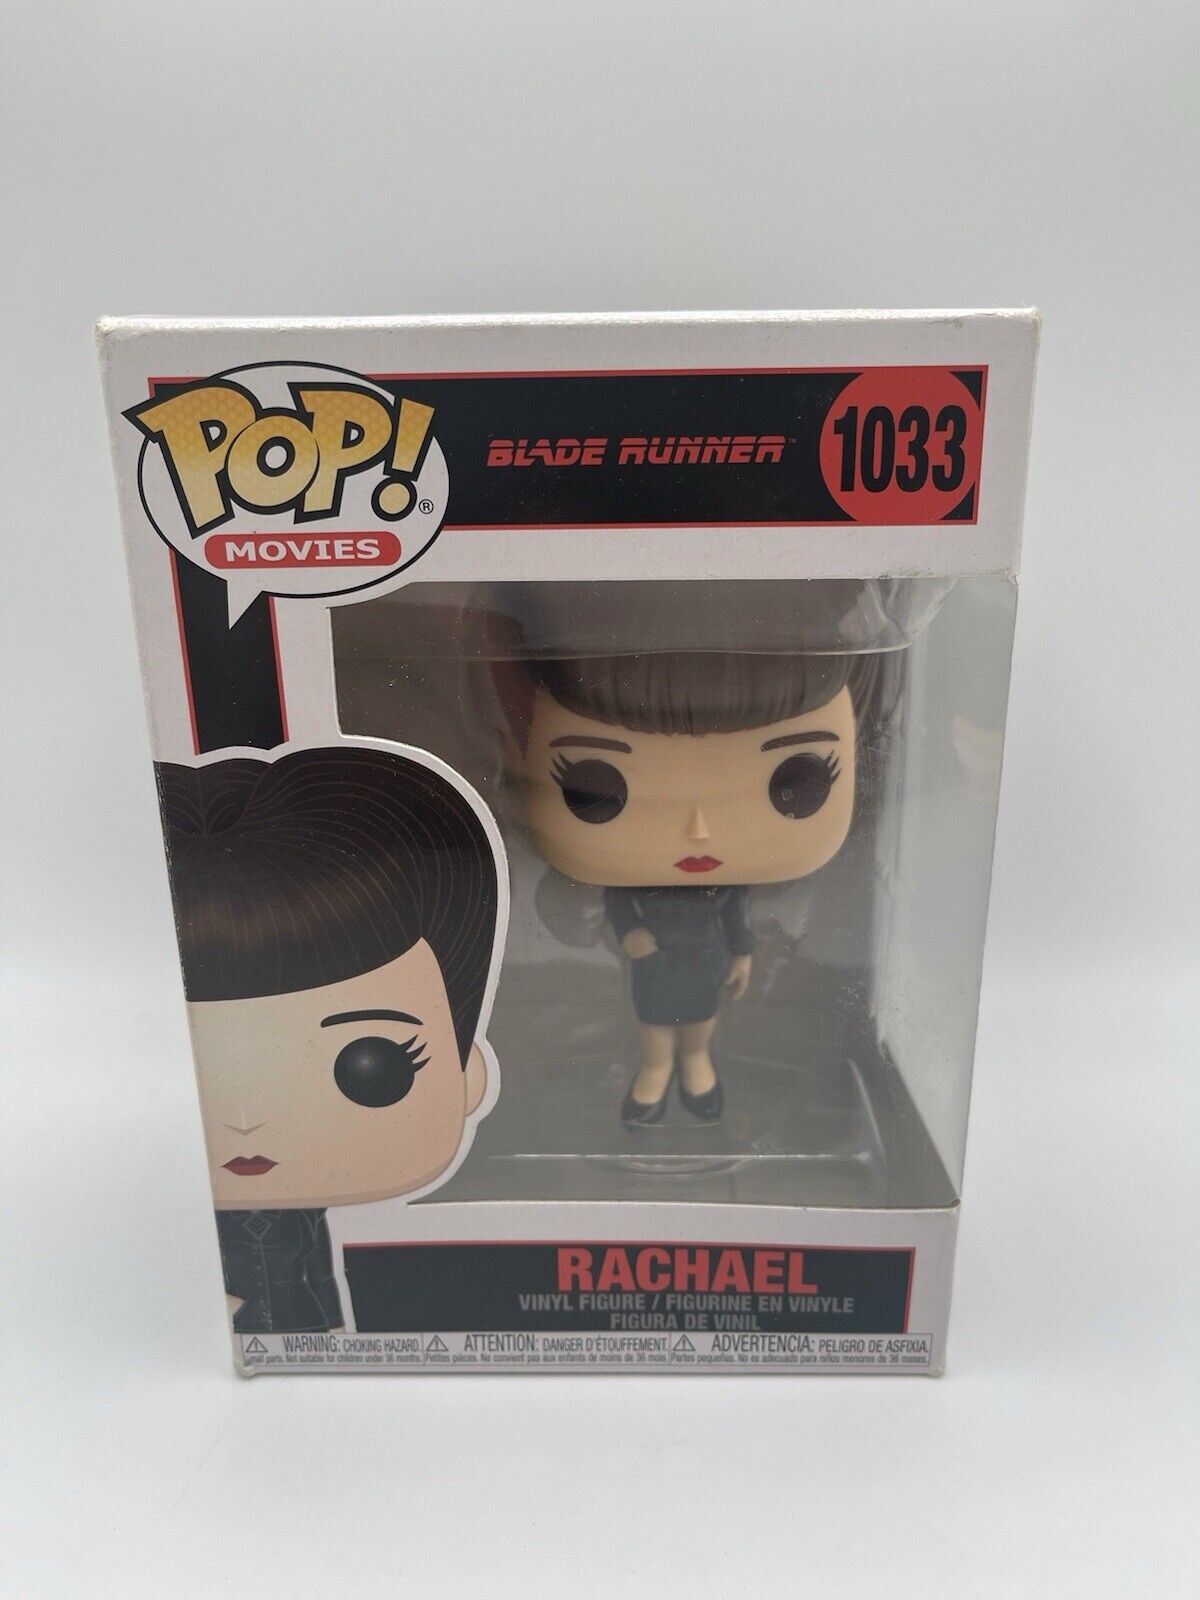 Rachael #1033 - Blade Runner Funko Pop Movie BRAND NEW